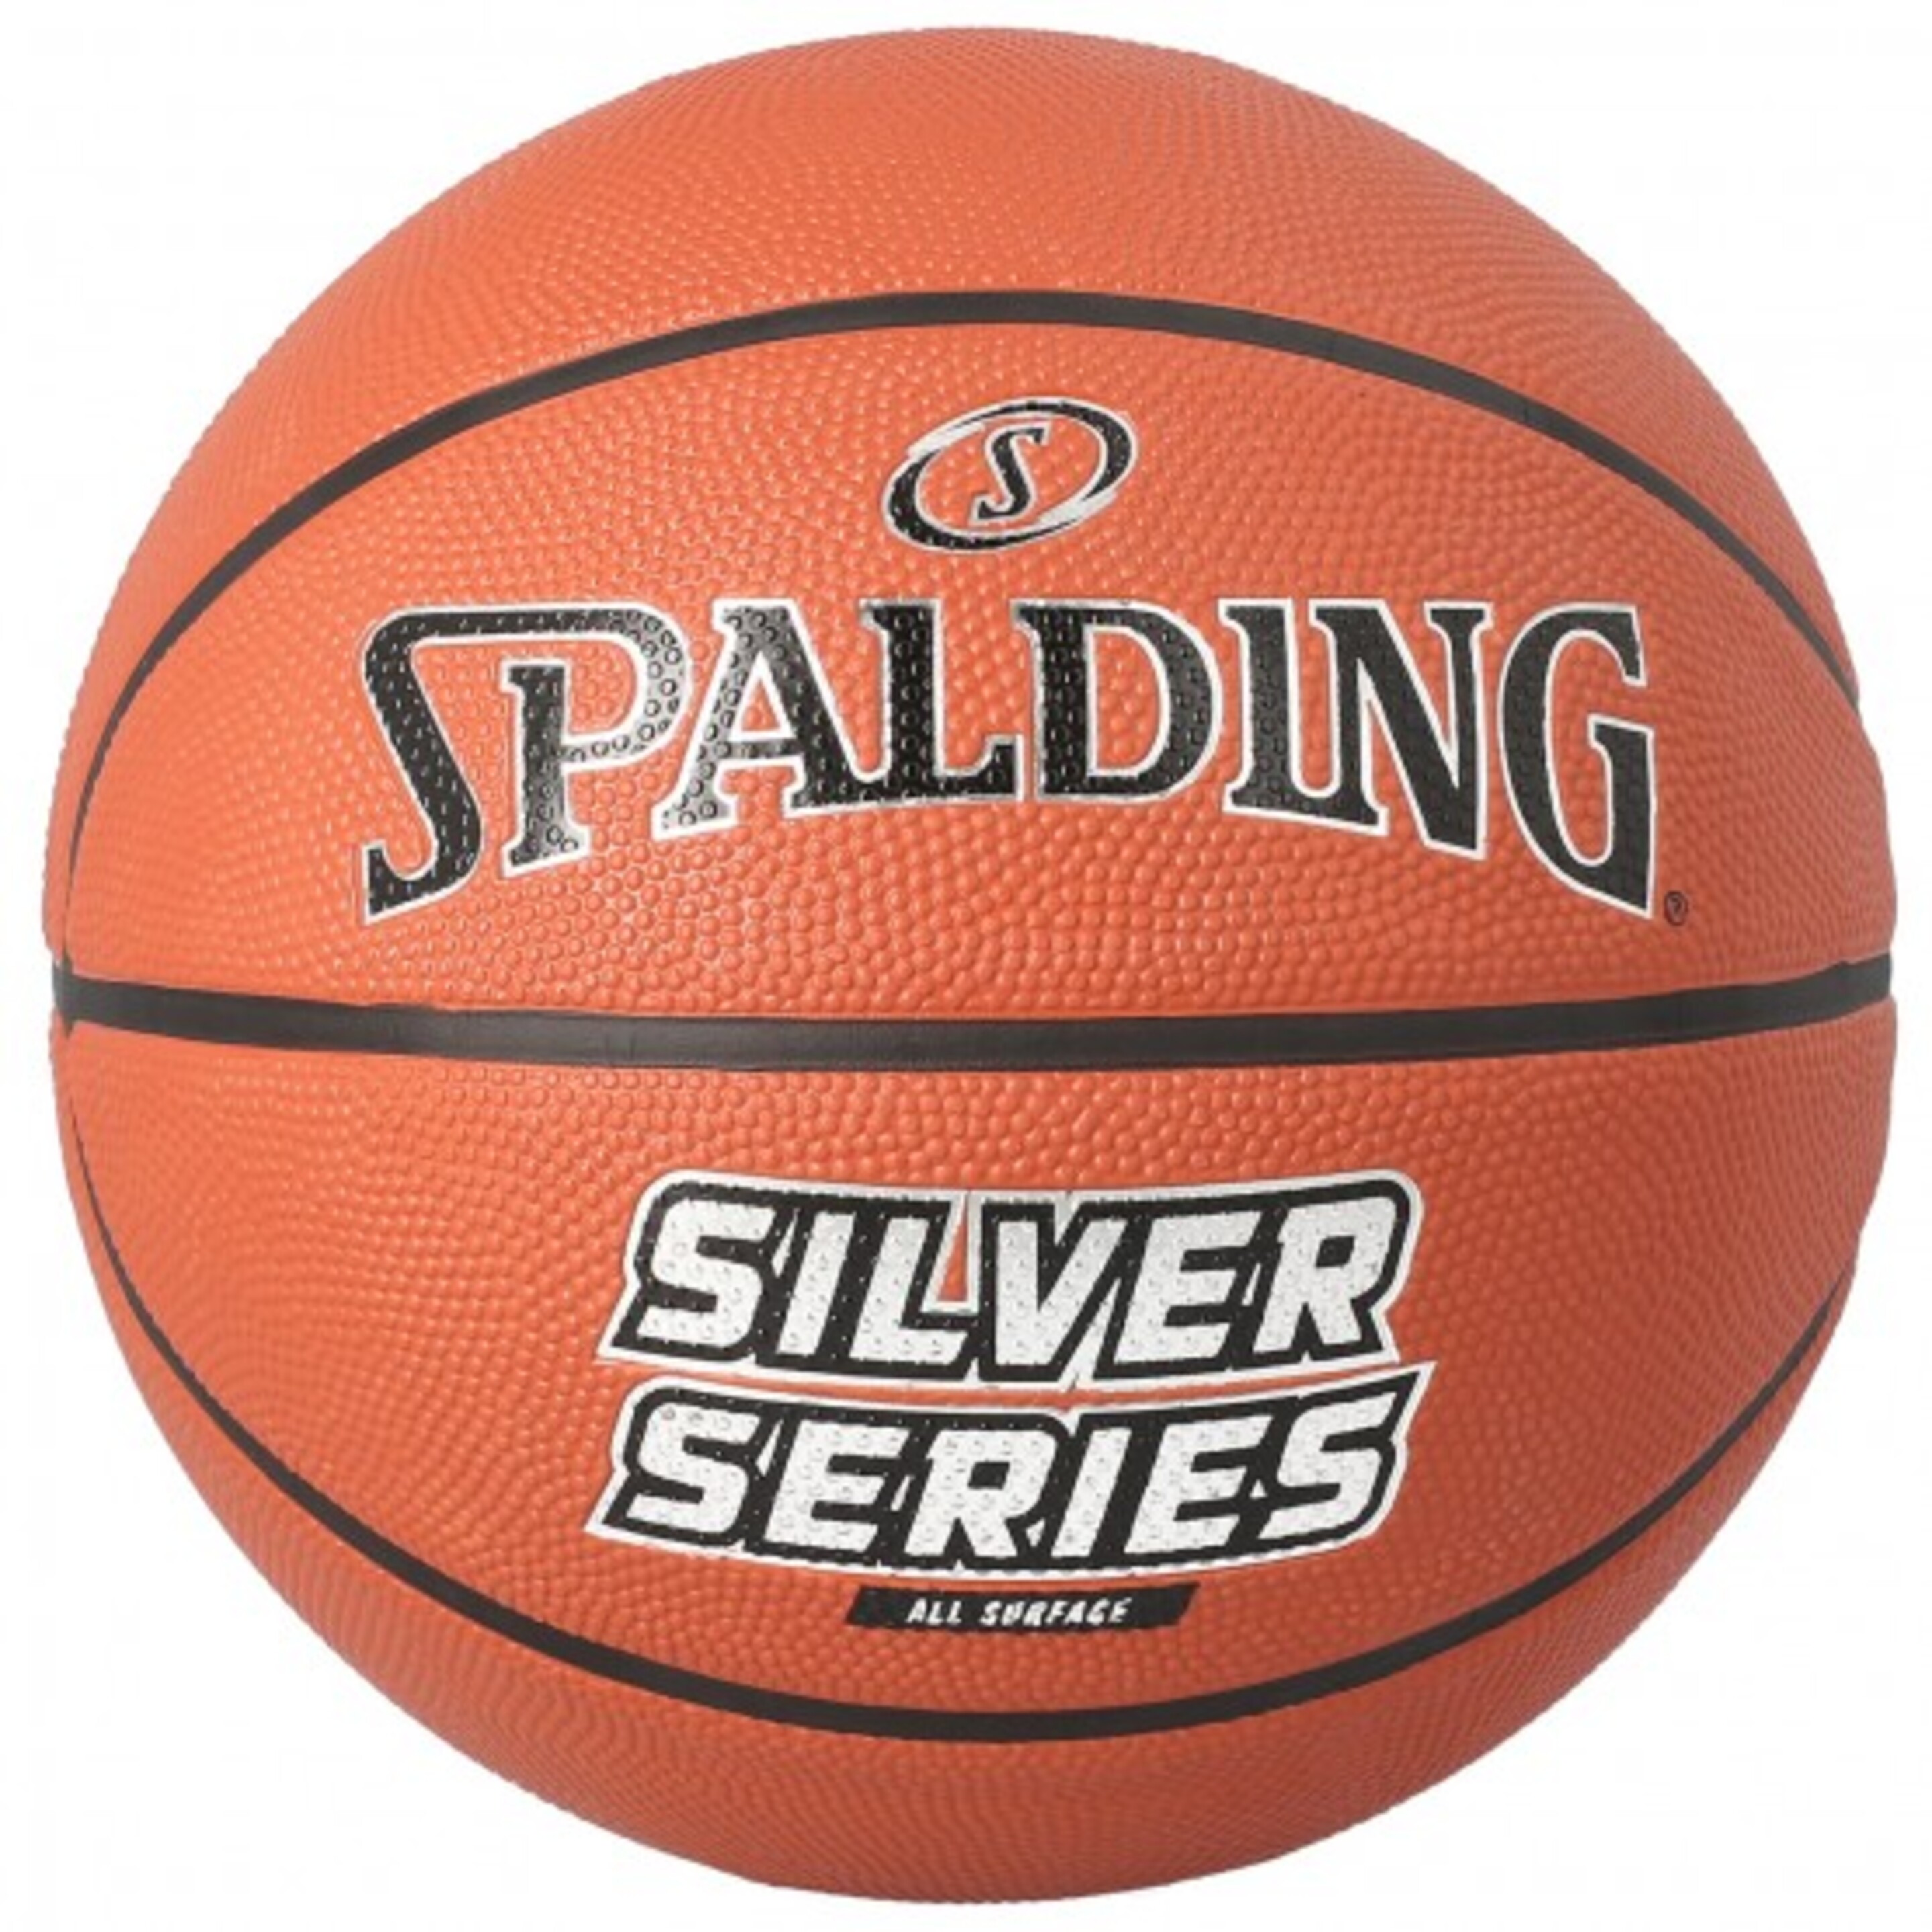 Basquetebol Spalding Silver Series Sz6